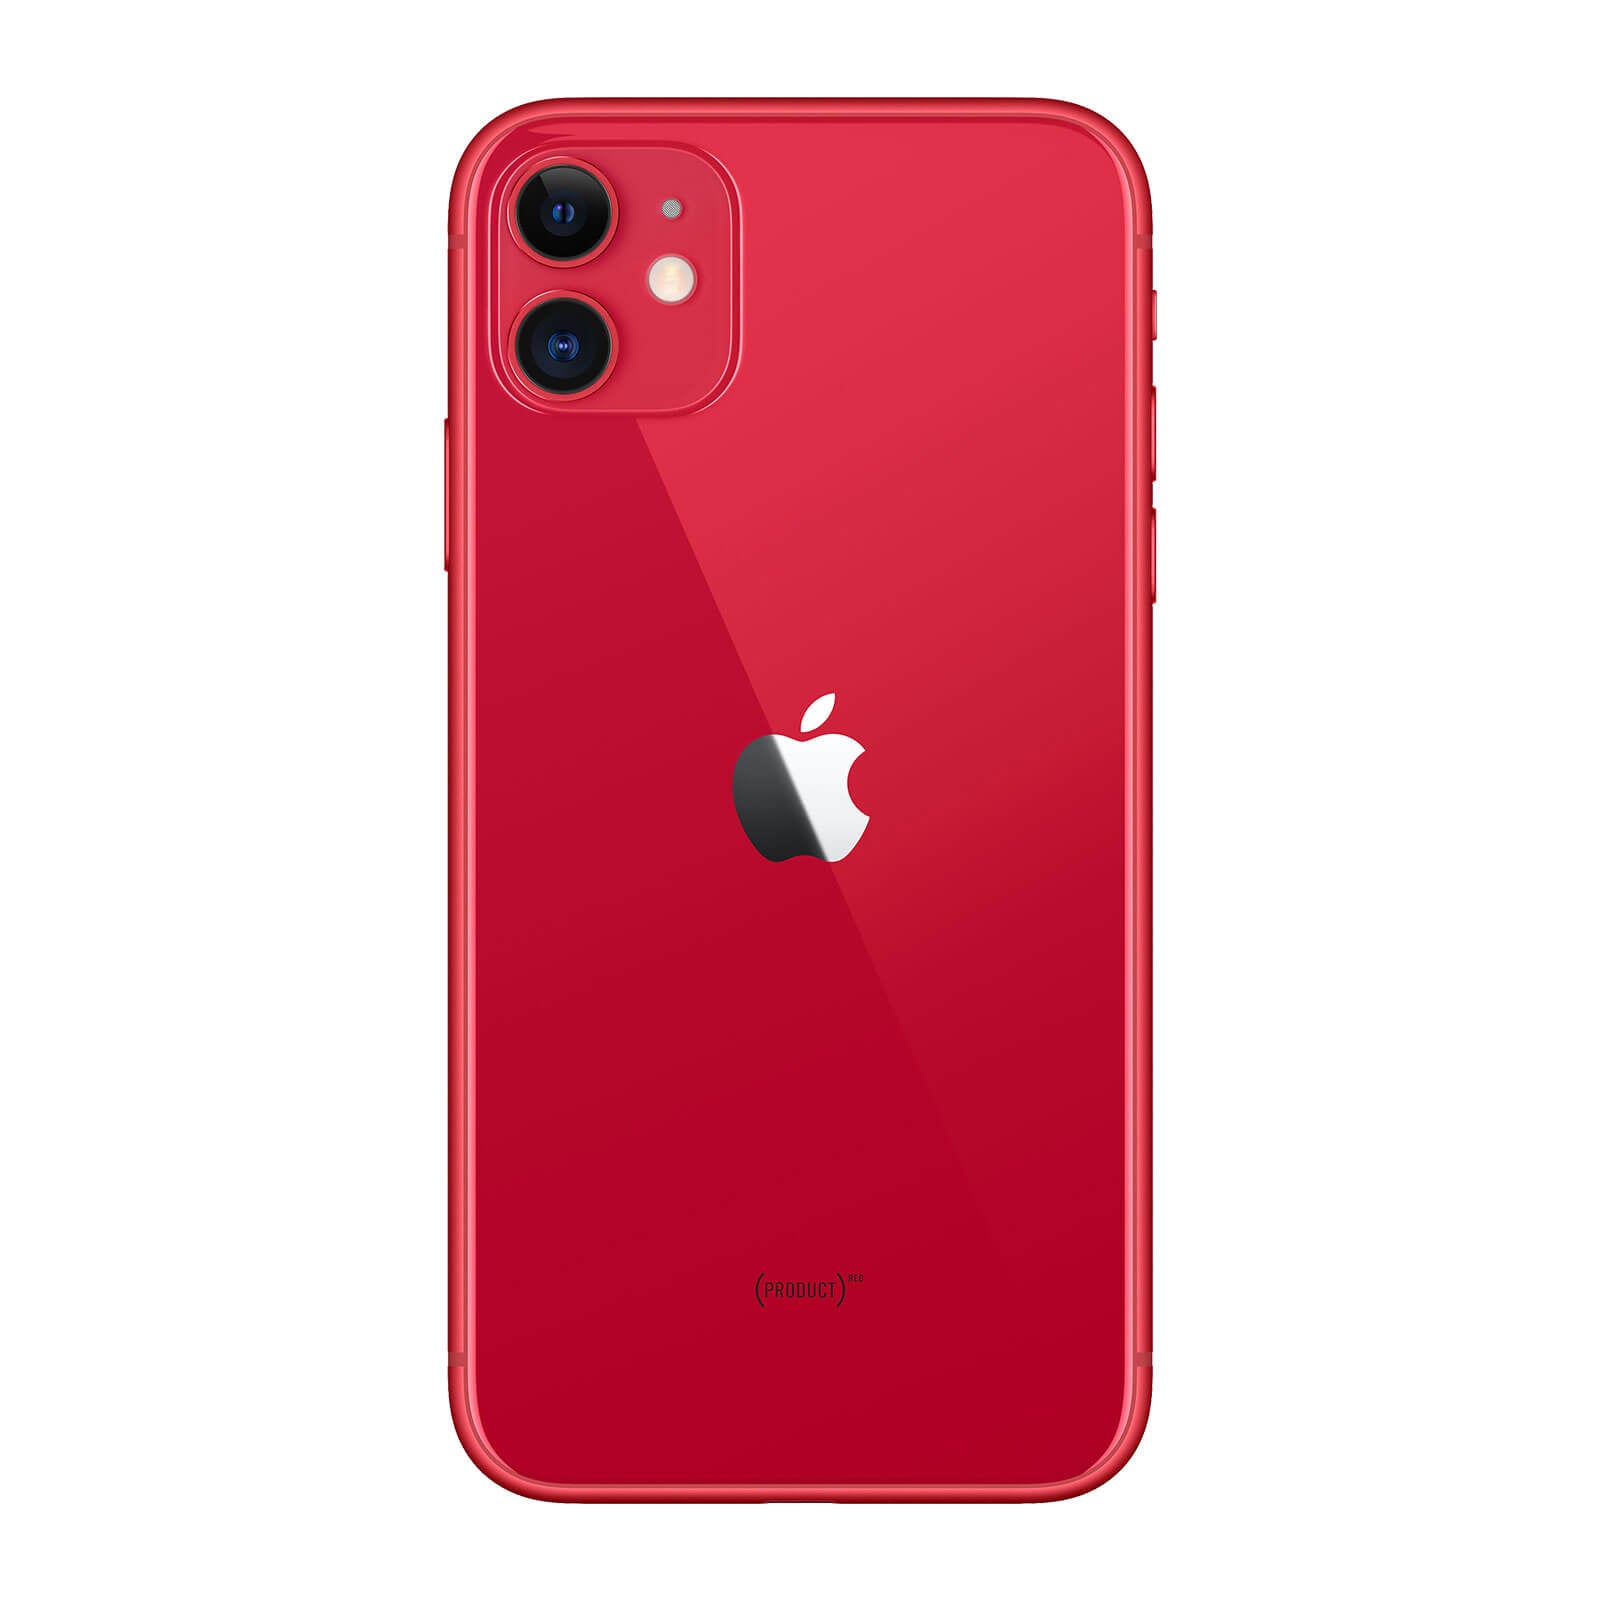 Apple iPhone 11 256GB Red Very Good - Unlocked